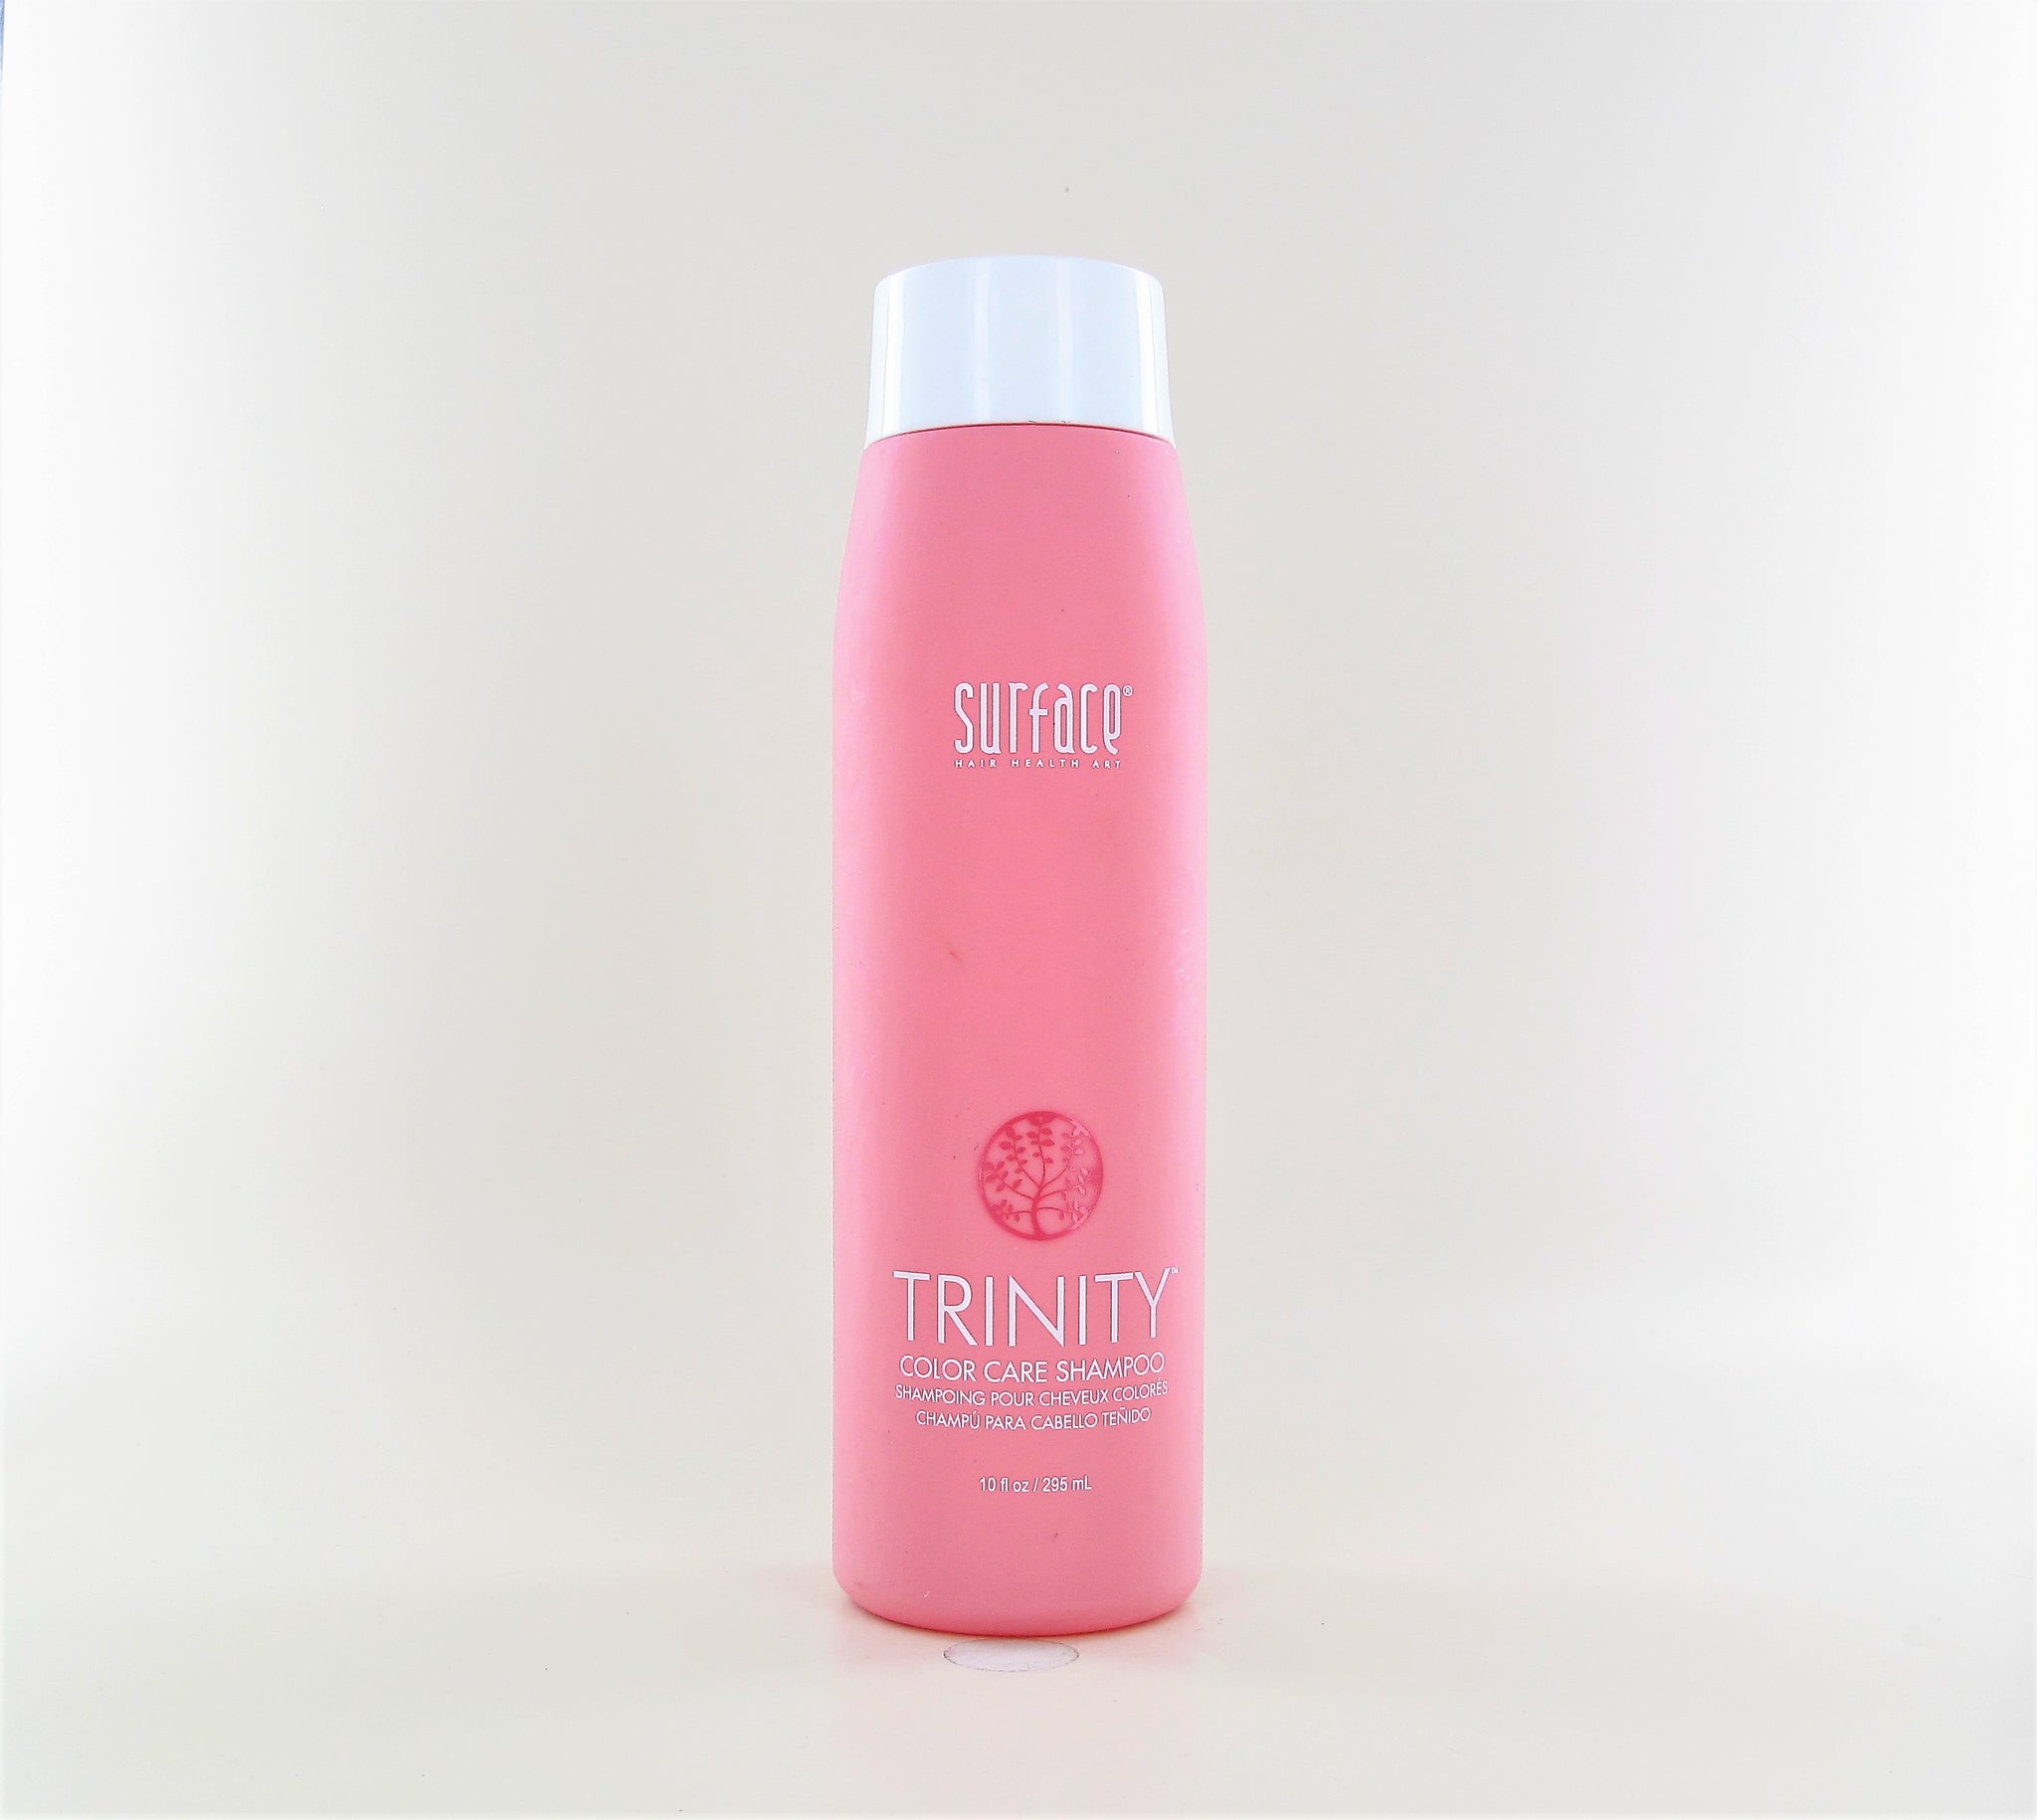 SURFACE Trinity Color Care Shampoo 10 oz